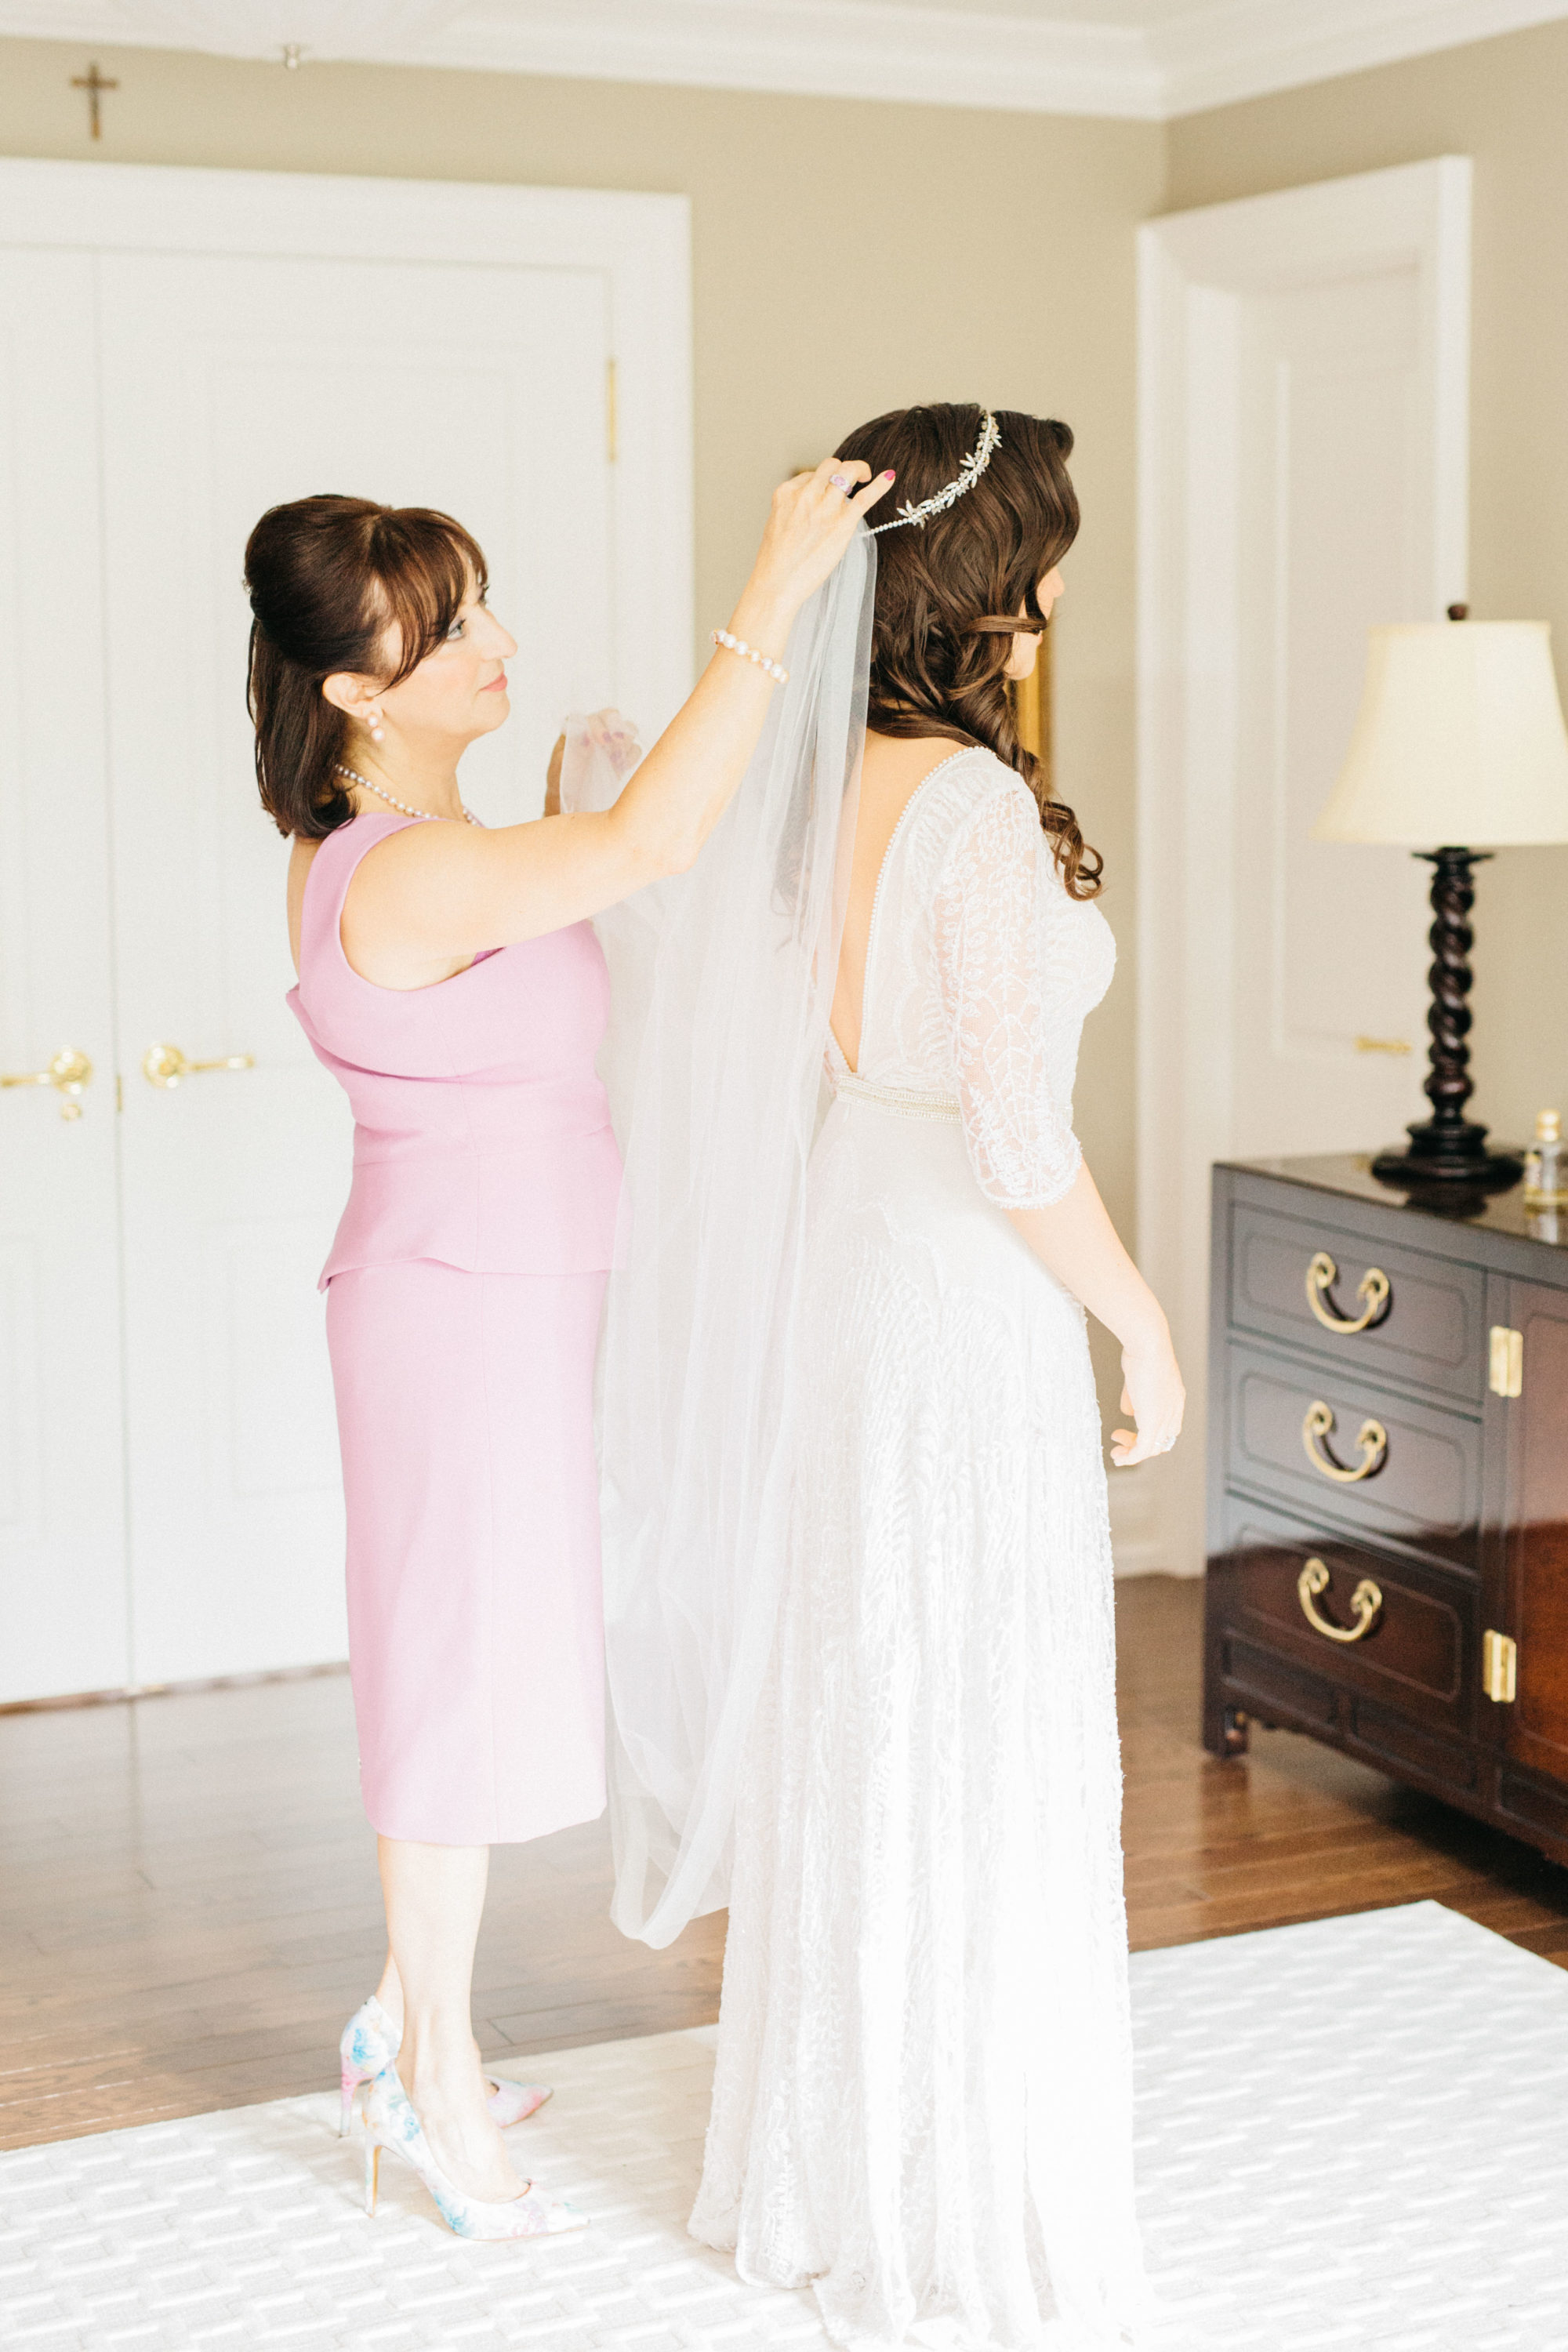 Bride's mother putting on bride's veil